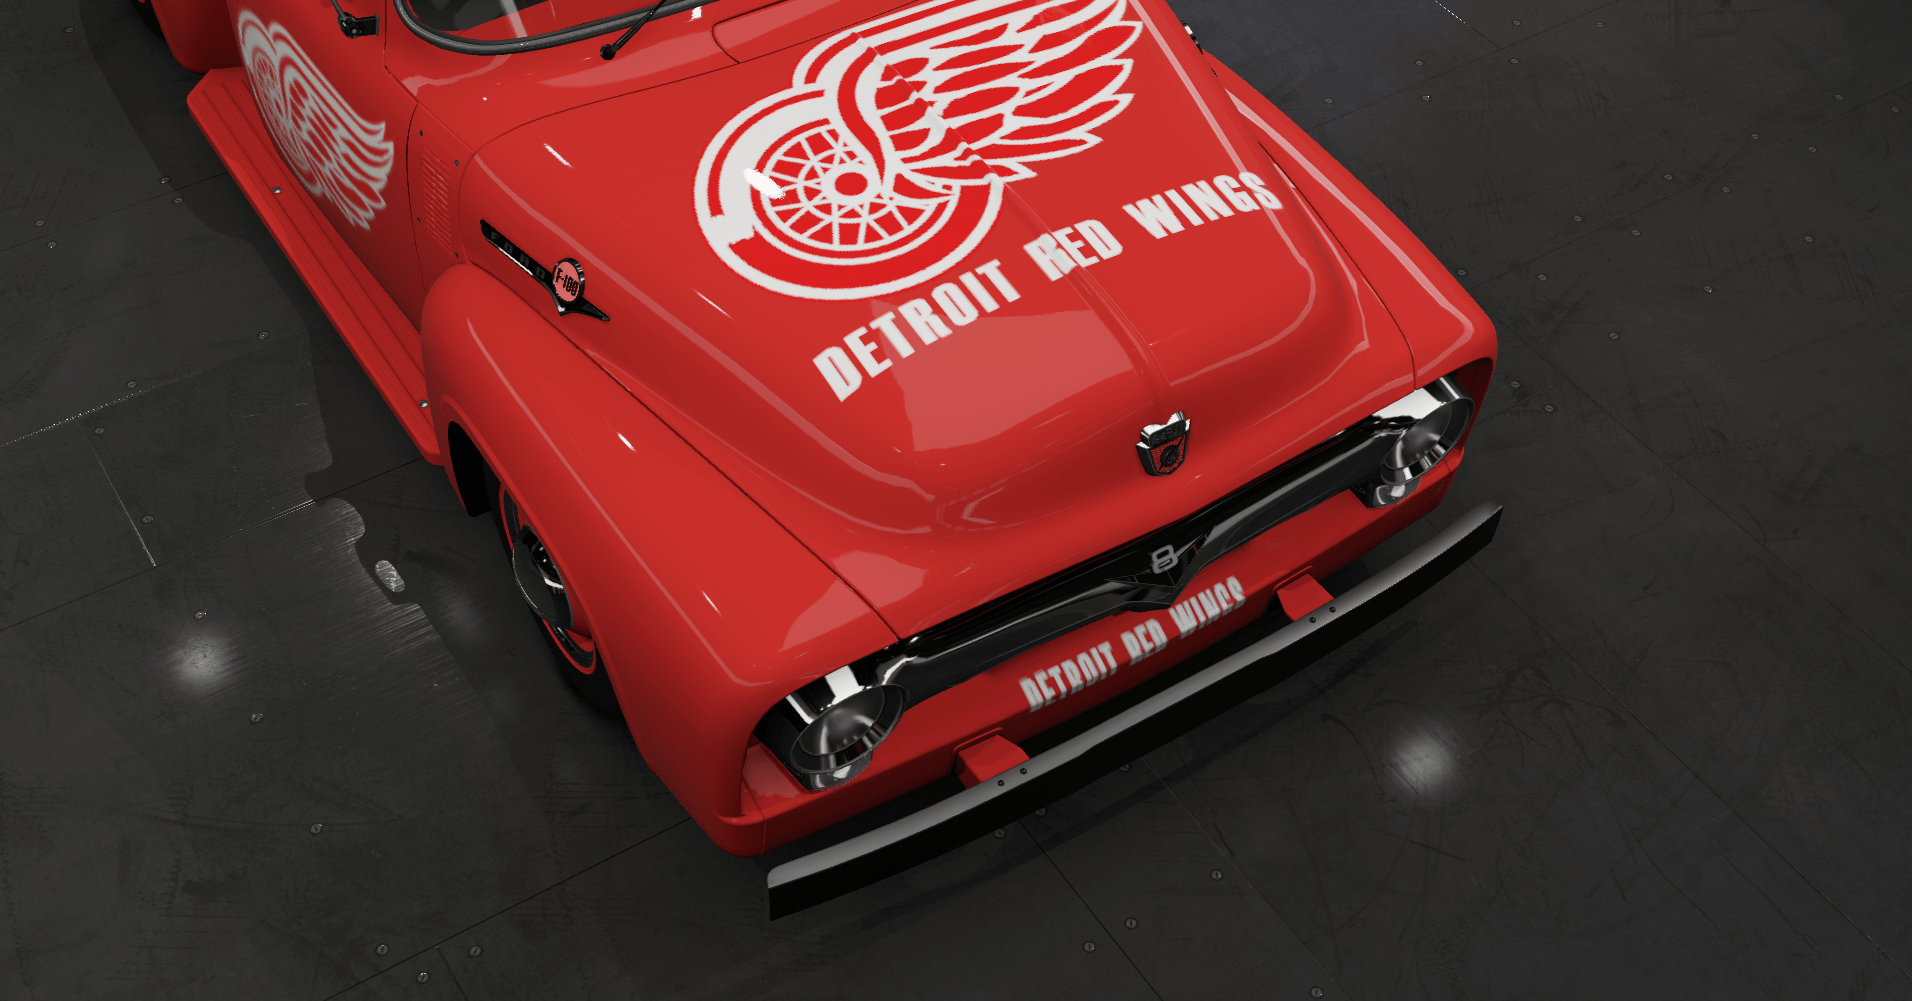 Detroit Red Wings Forza - Ryan Bucci Portfolio